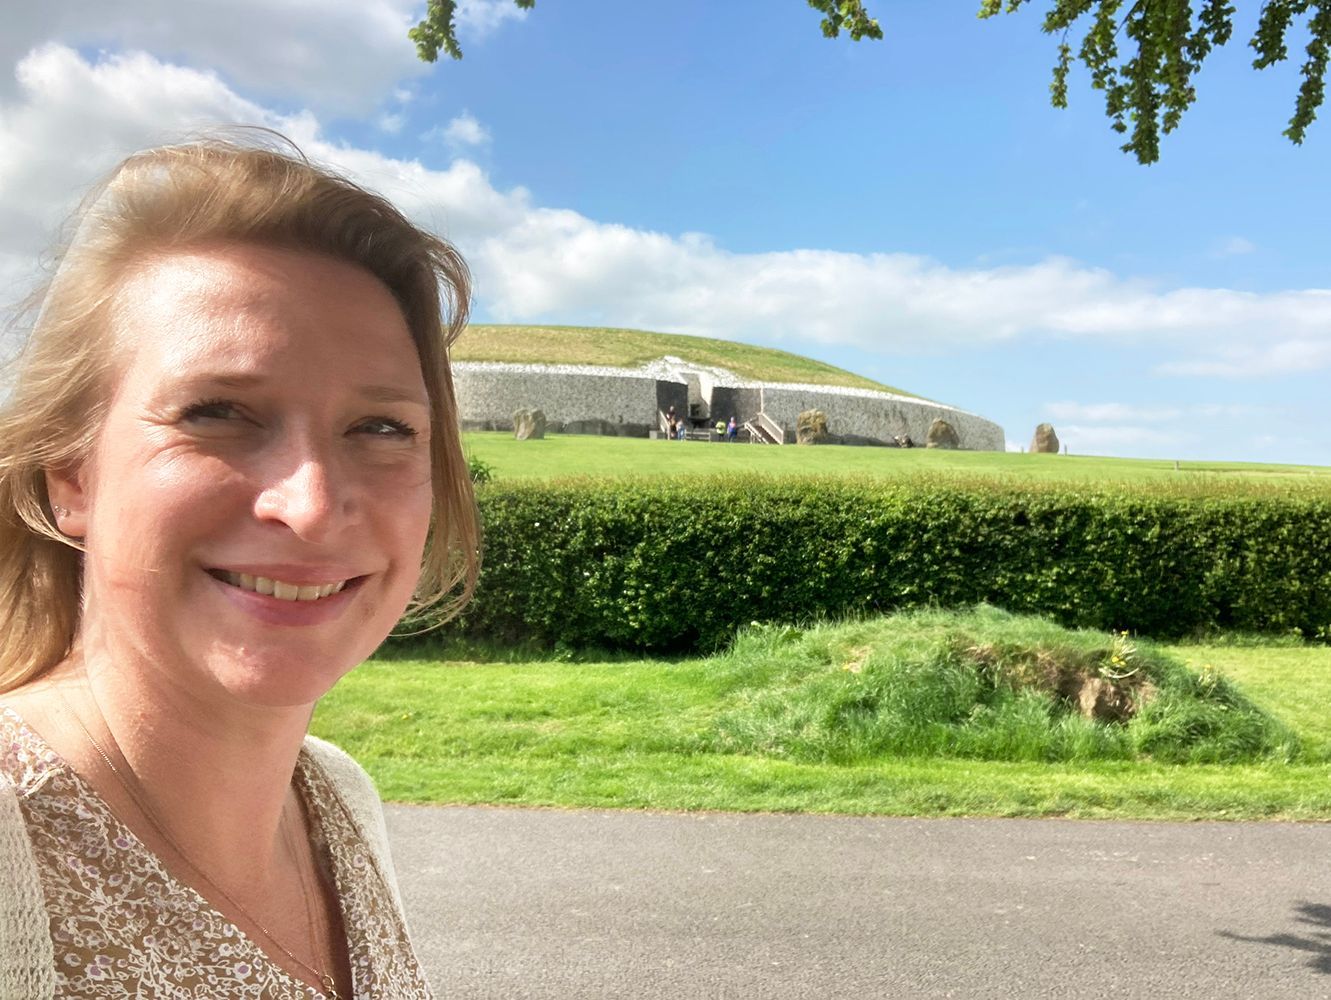 Michelle Dujardin in front of the Newgrange monument in Ireland